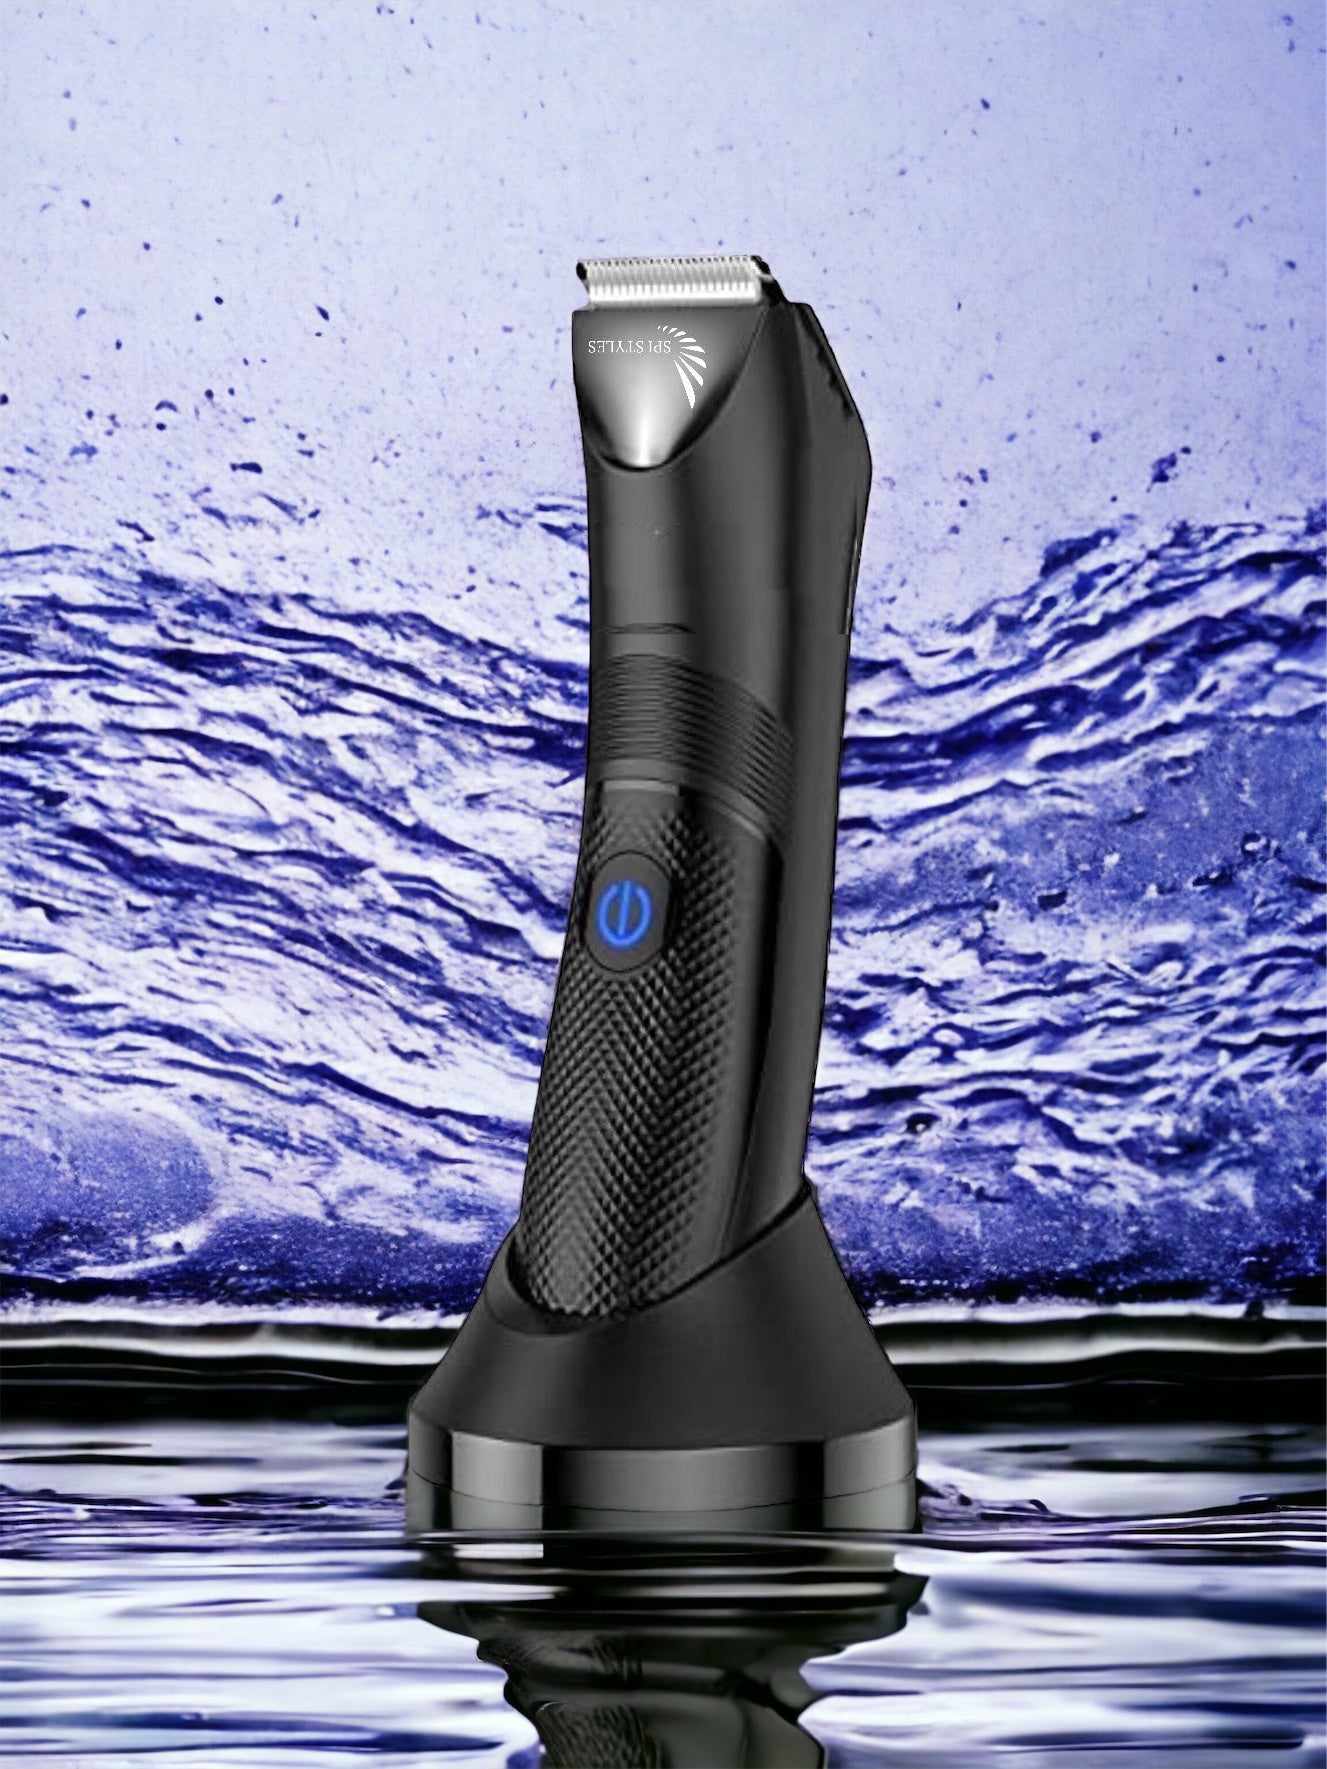 SPI Styles Cordless Body Trimmer with LED Light, Wet / Dry Shaver